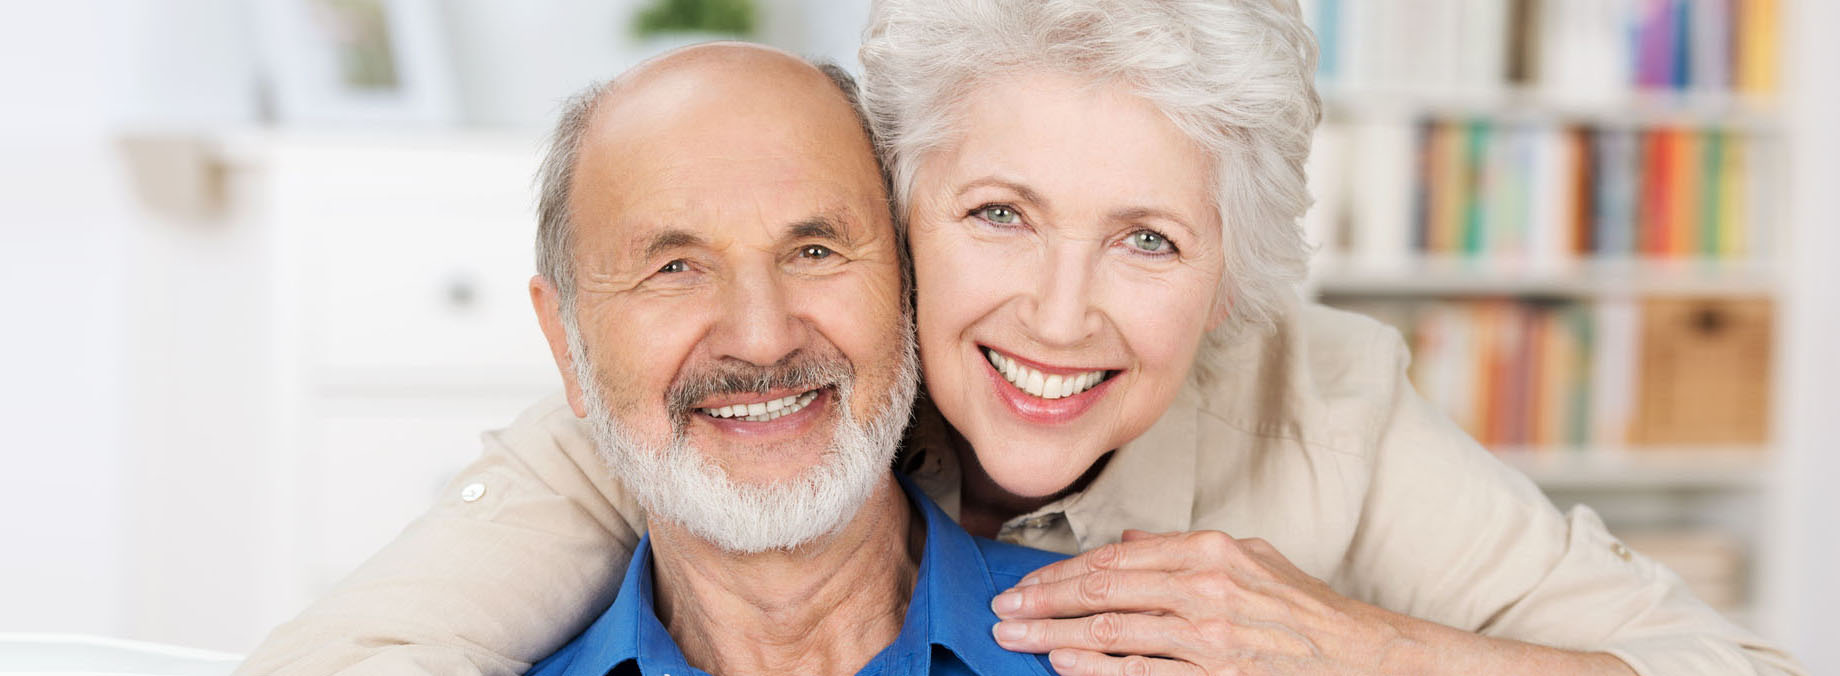 Affectionate elderly couple